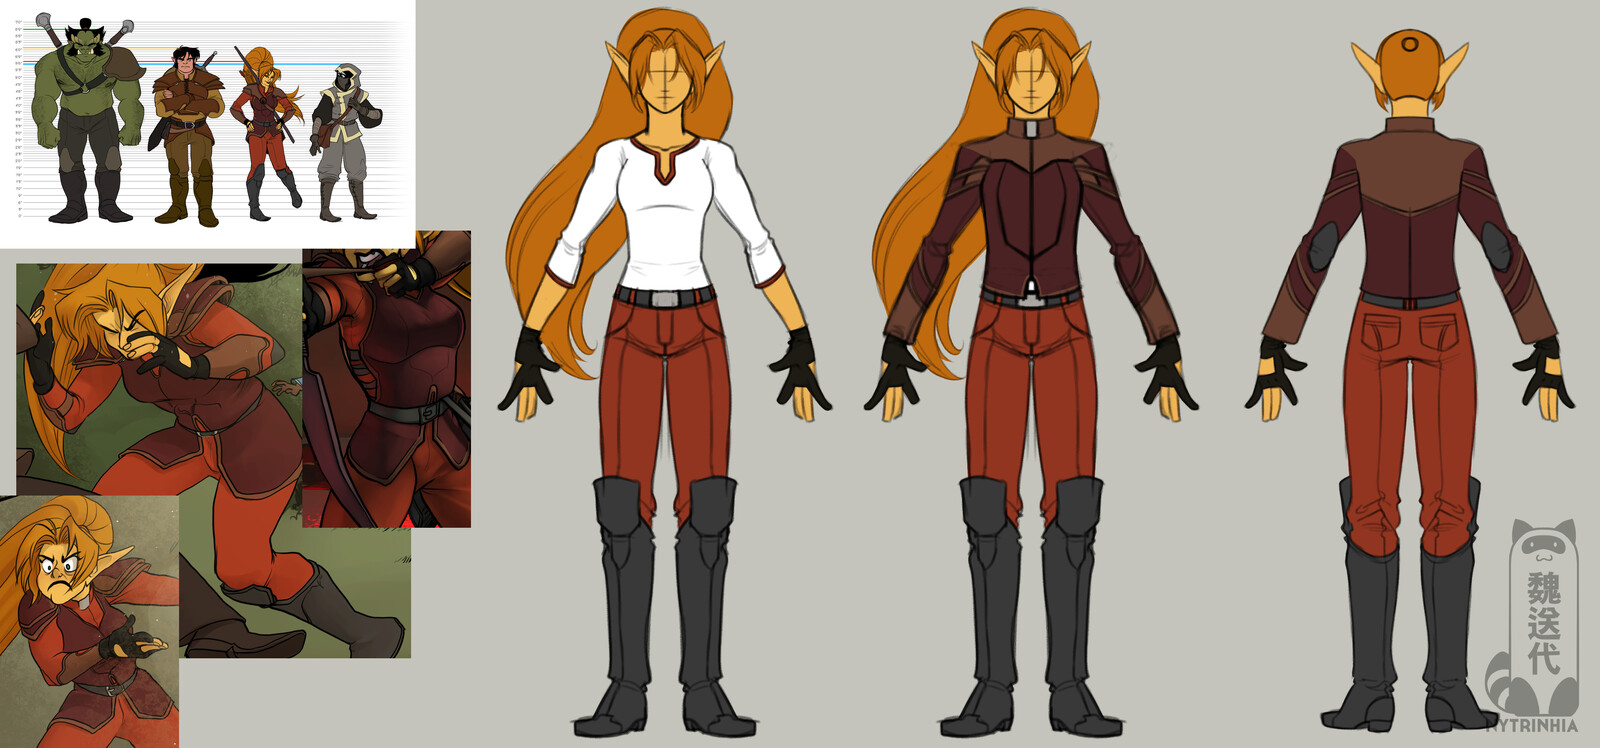 Lyra's clothes and armor "modernized"